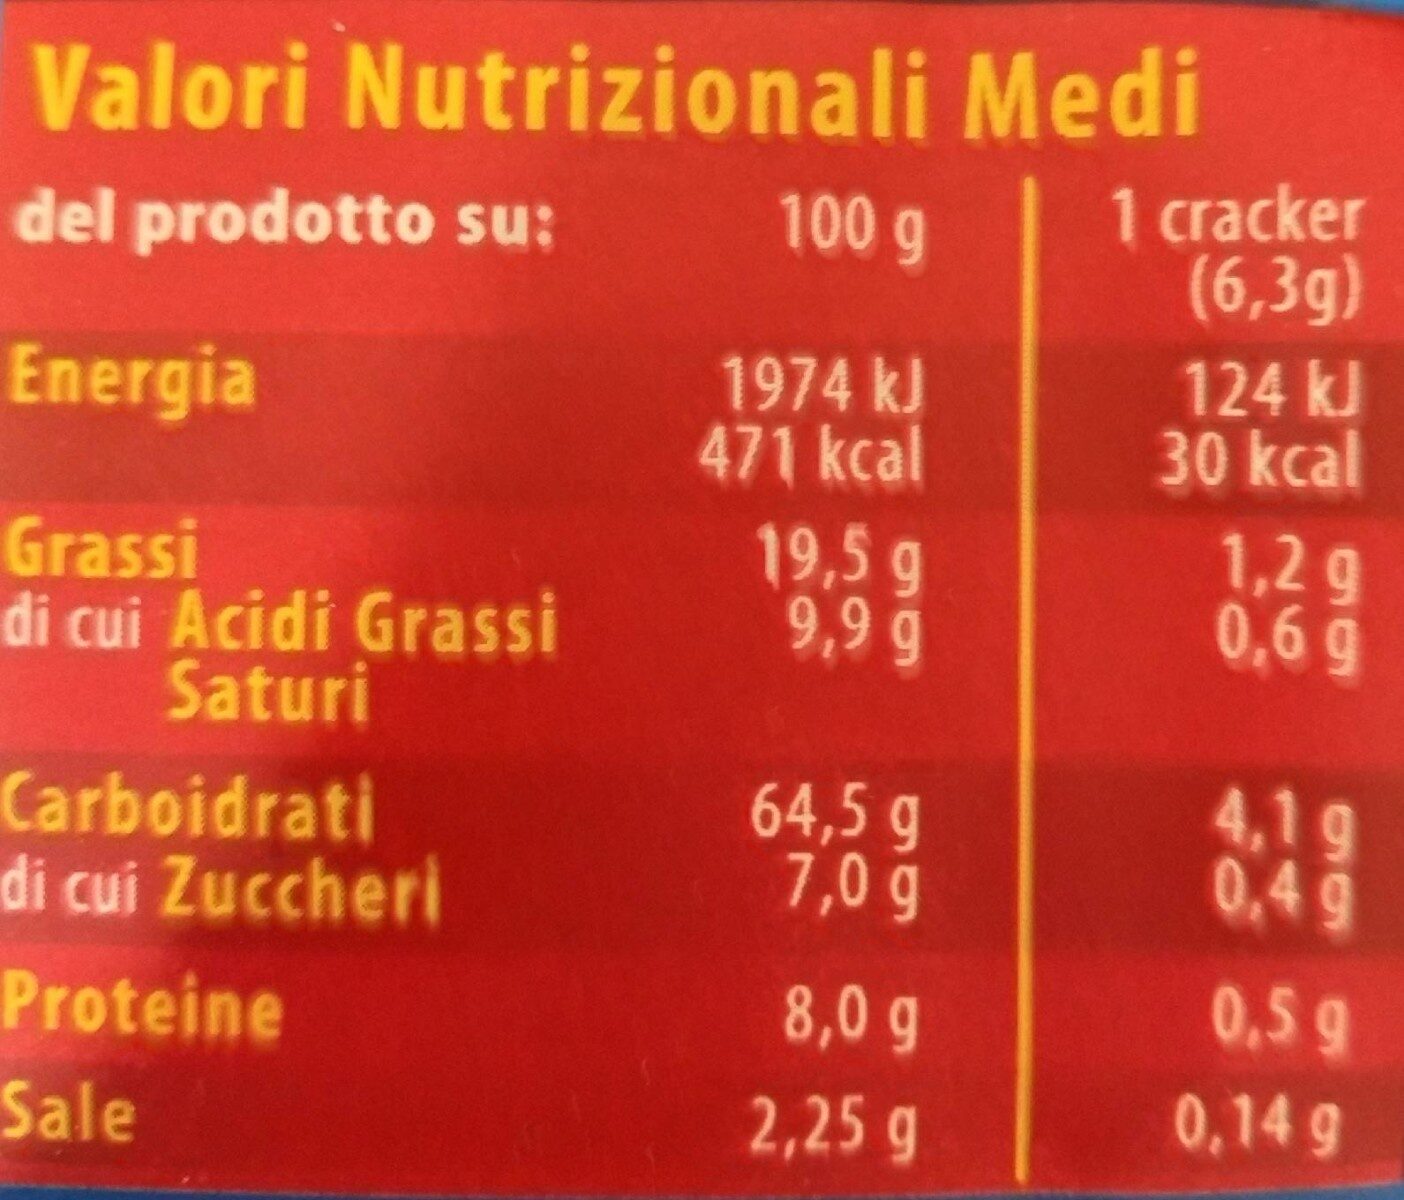 Trà crackers - Nutrition facts - fr